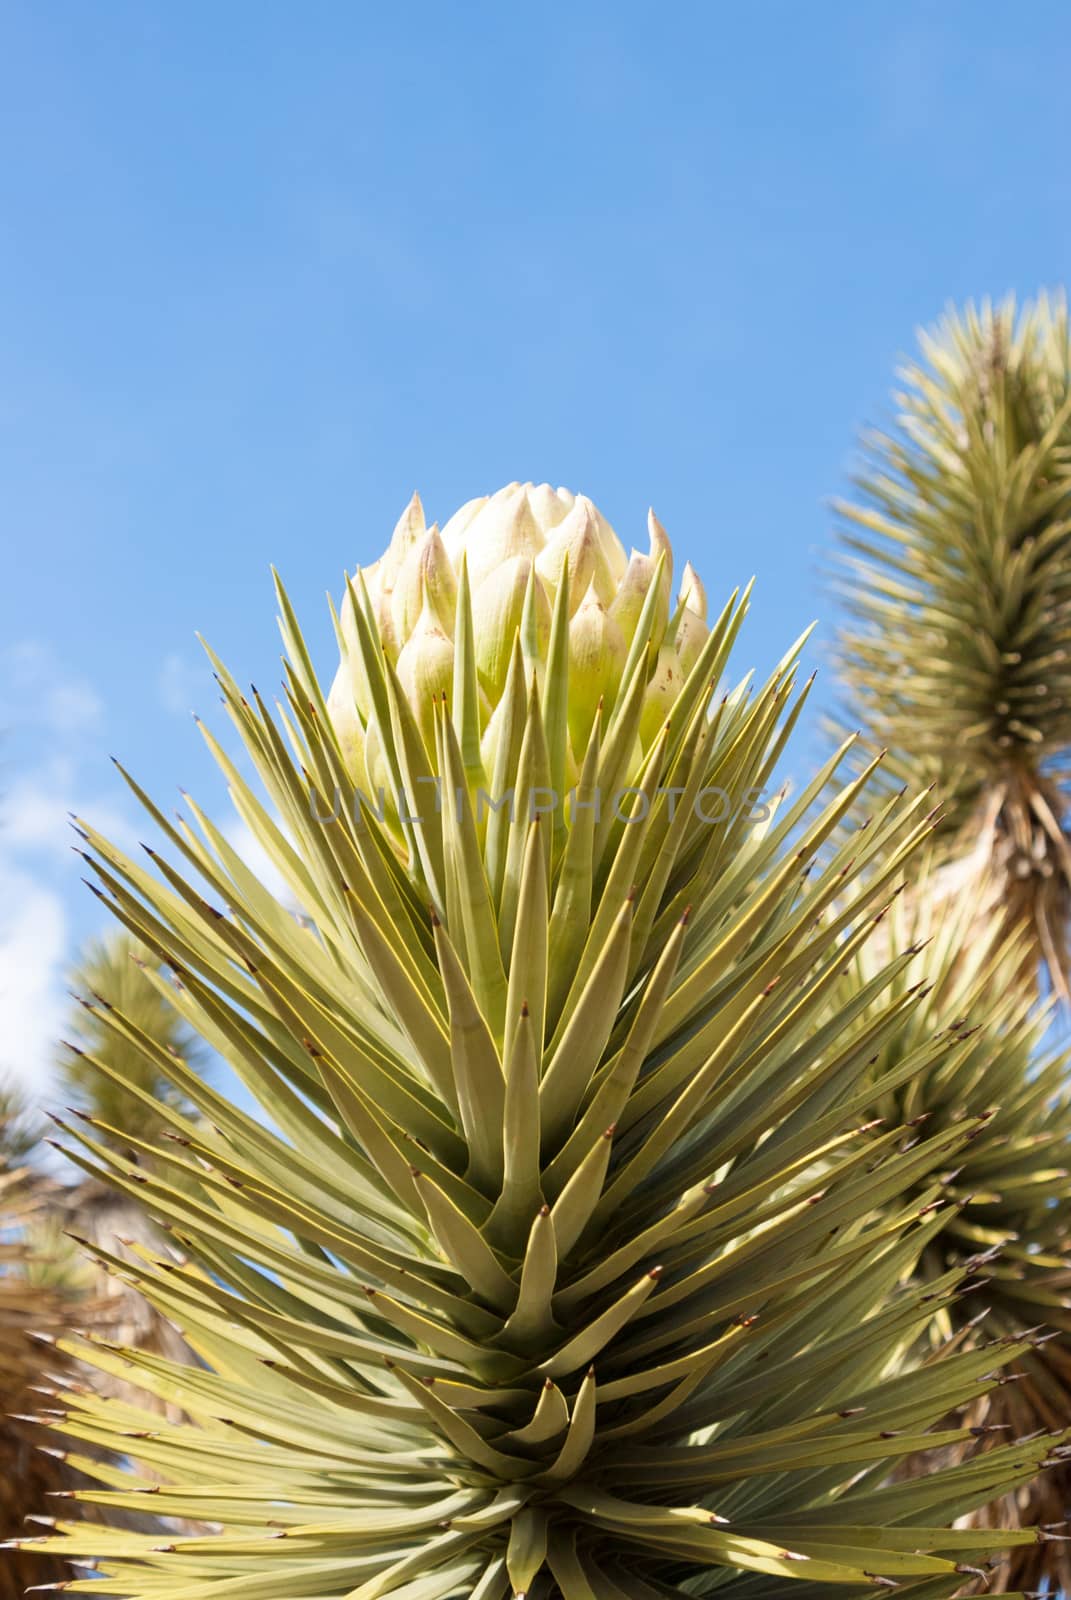 Yucca Flower by emattil